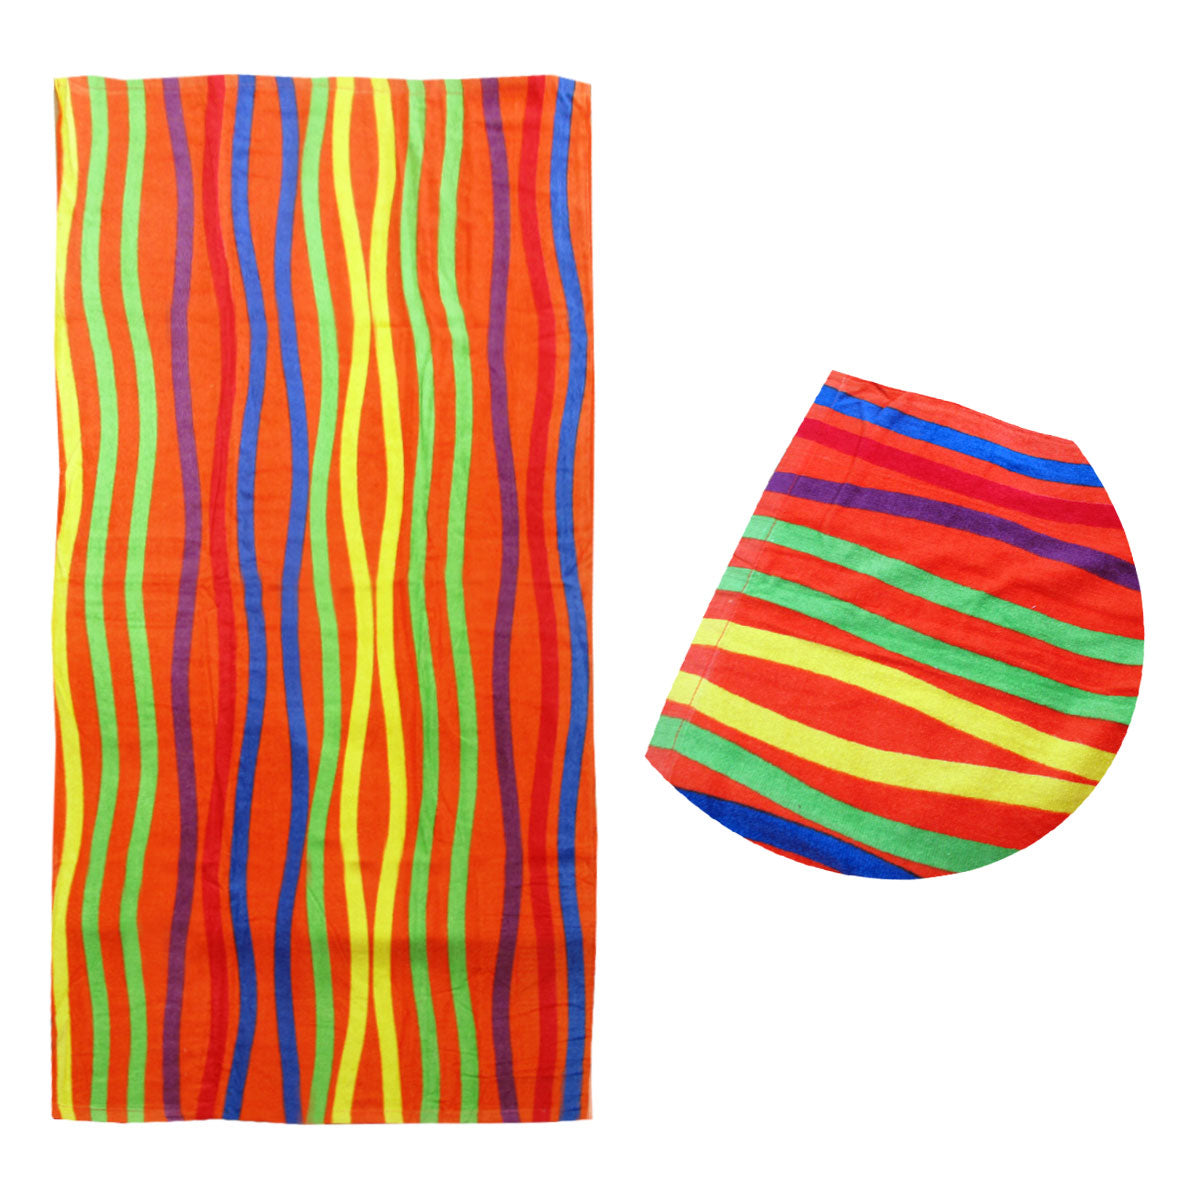 Bright Stripes Cotton Velour Printed Beach Towel - Newstart Furniture